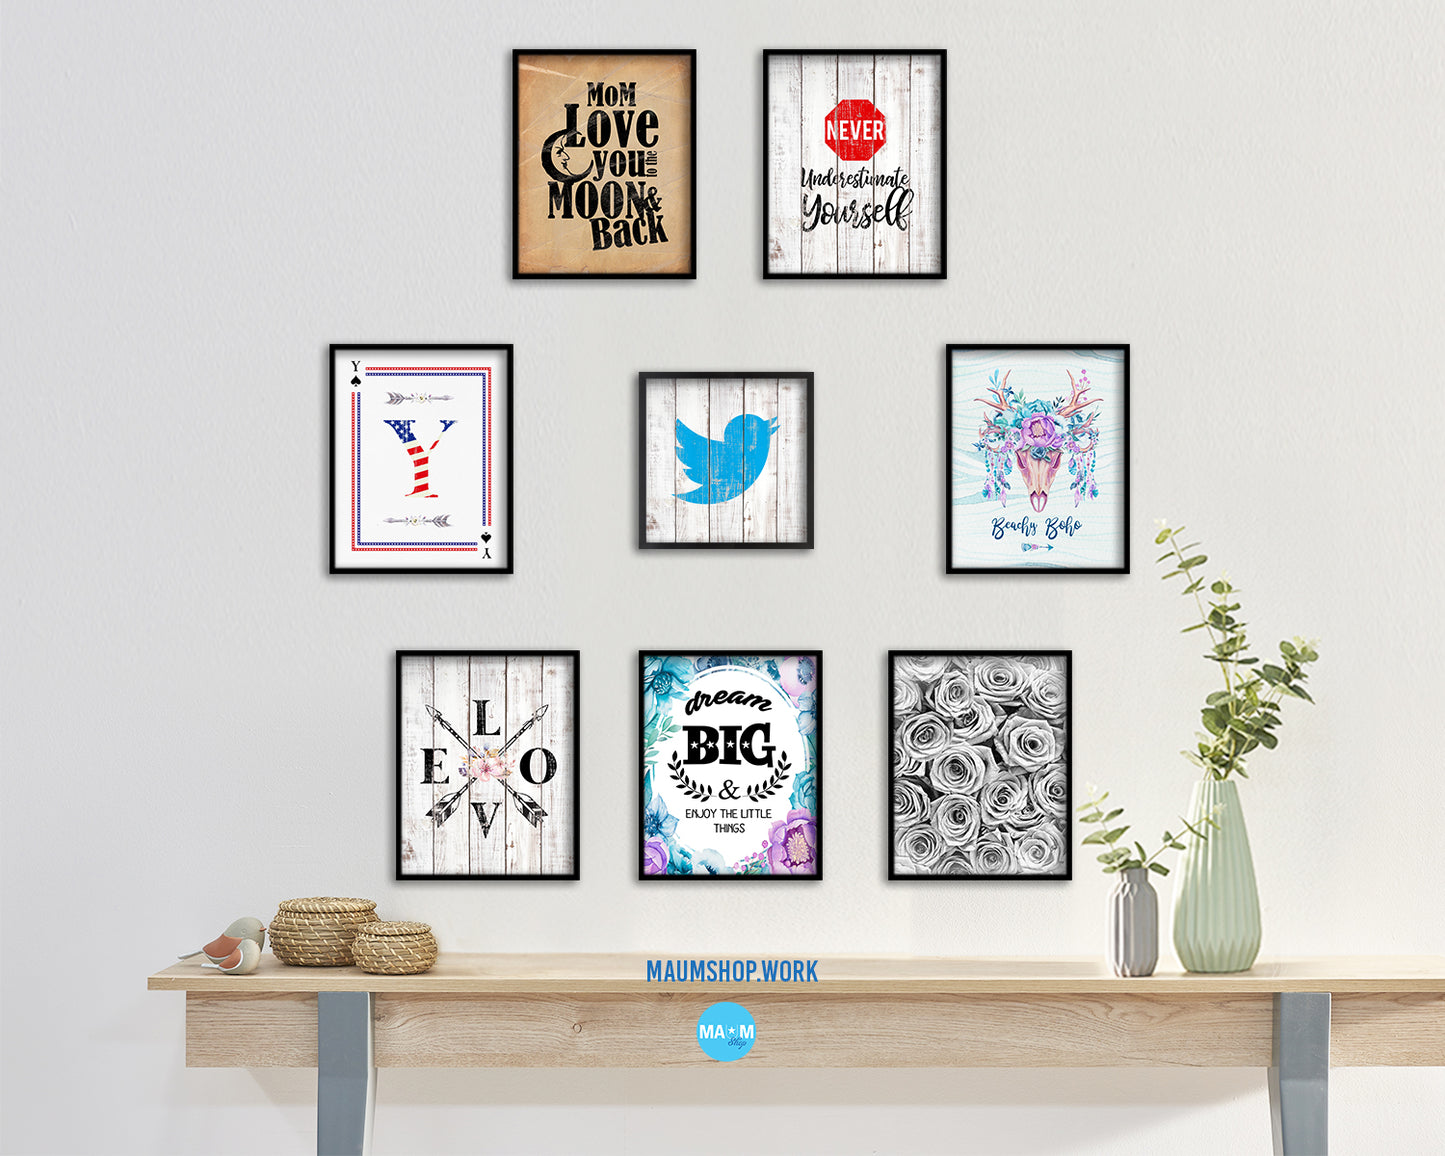 Twitter Social Media Symbol Icons logo Framed Print Shabby Chic Home Decor Wall Art Gifts